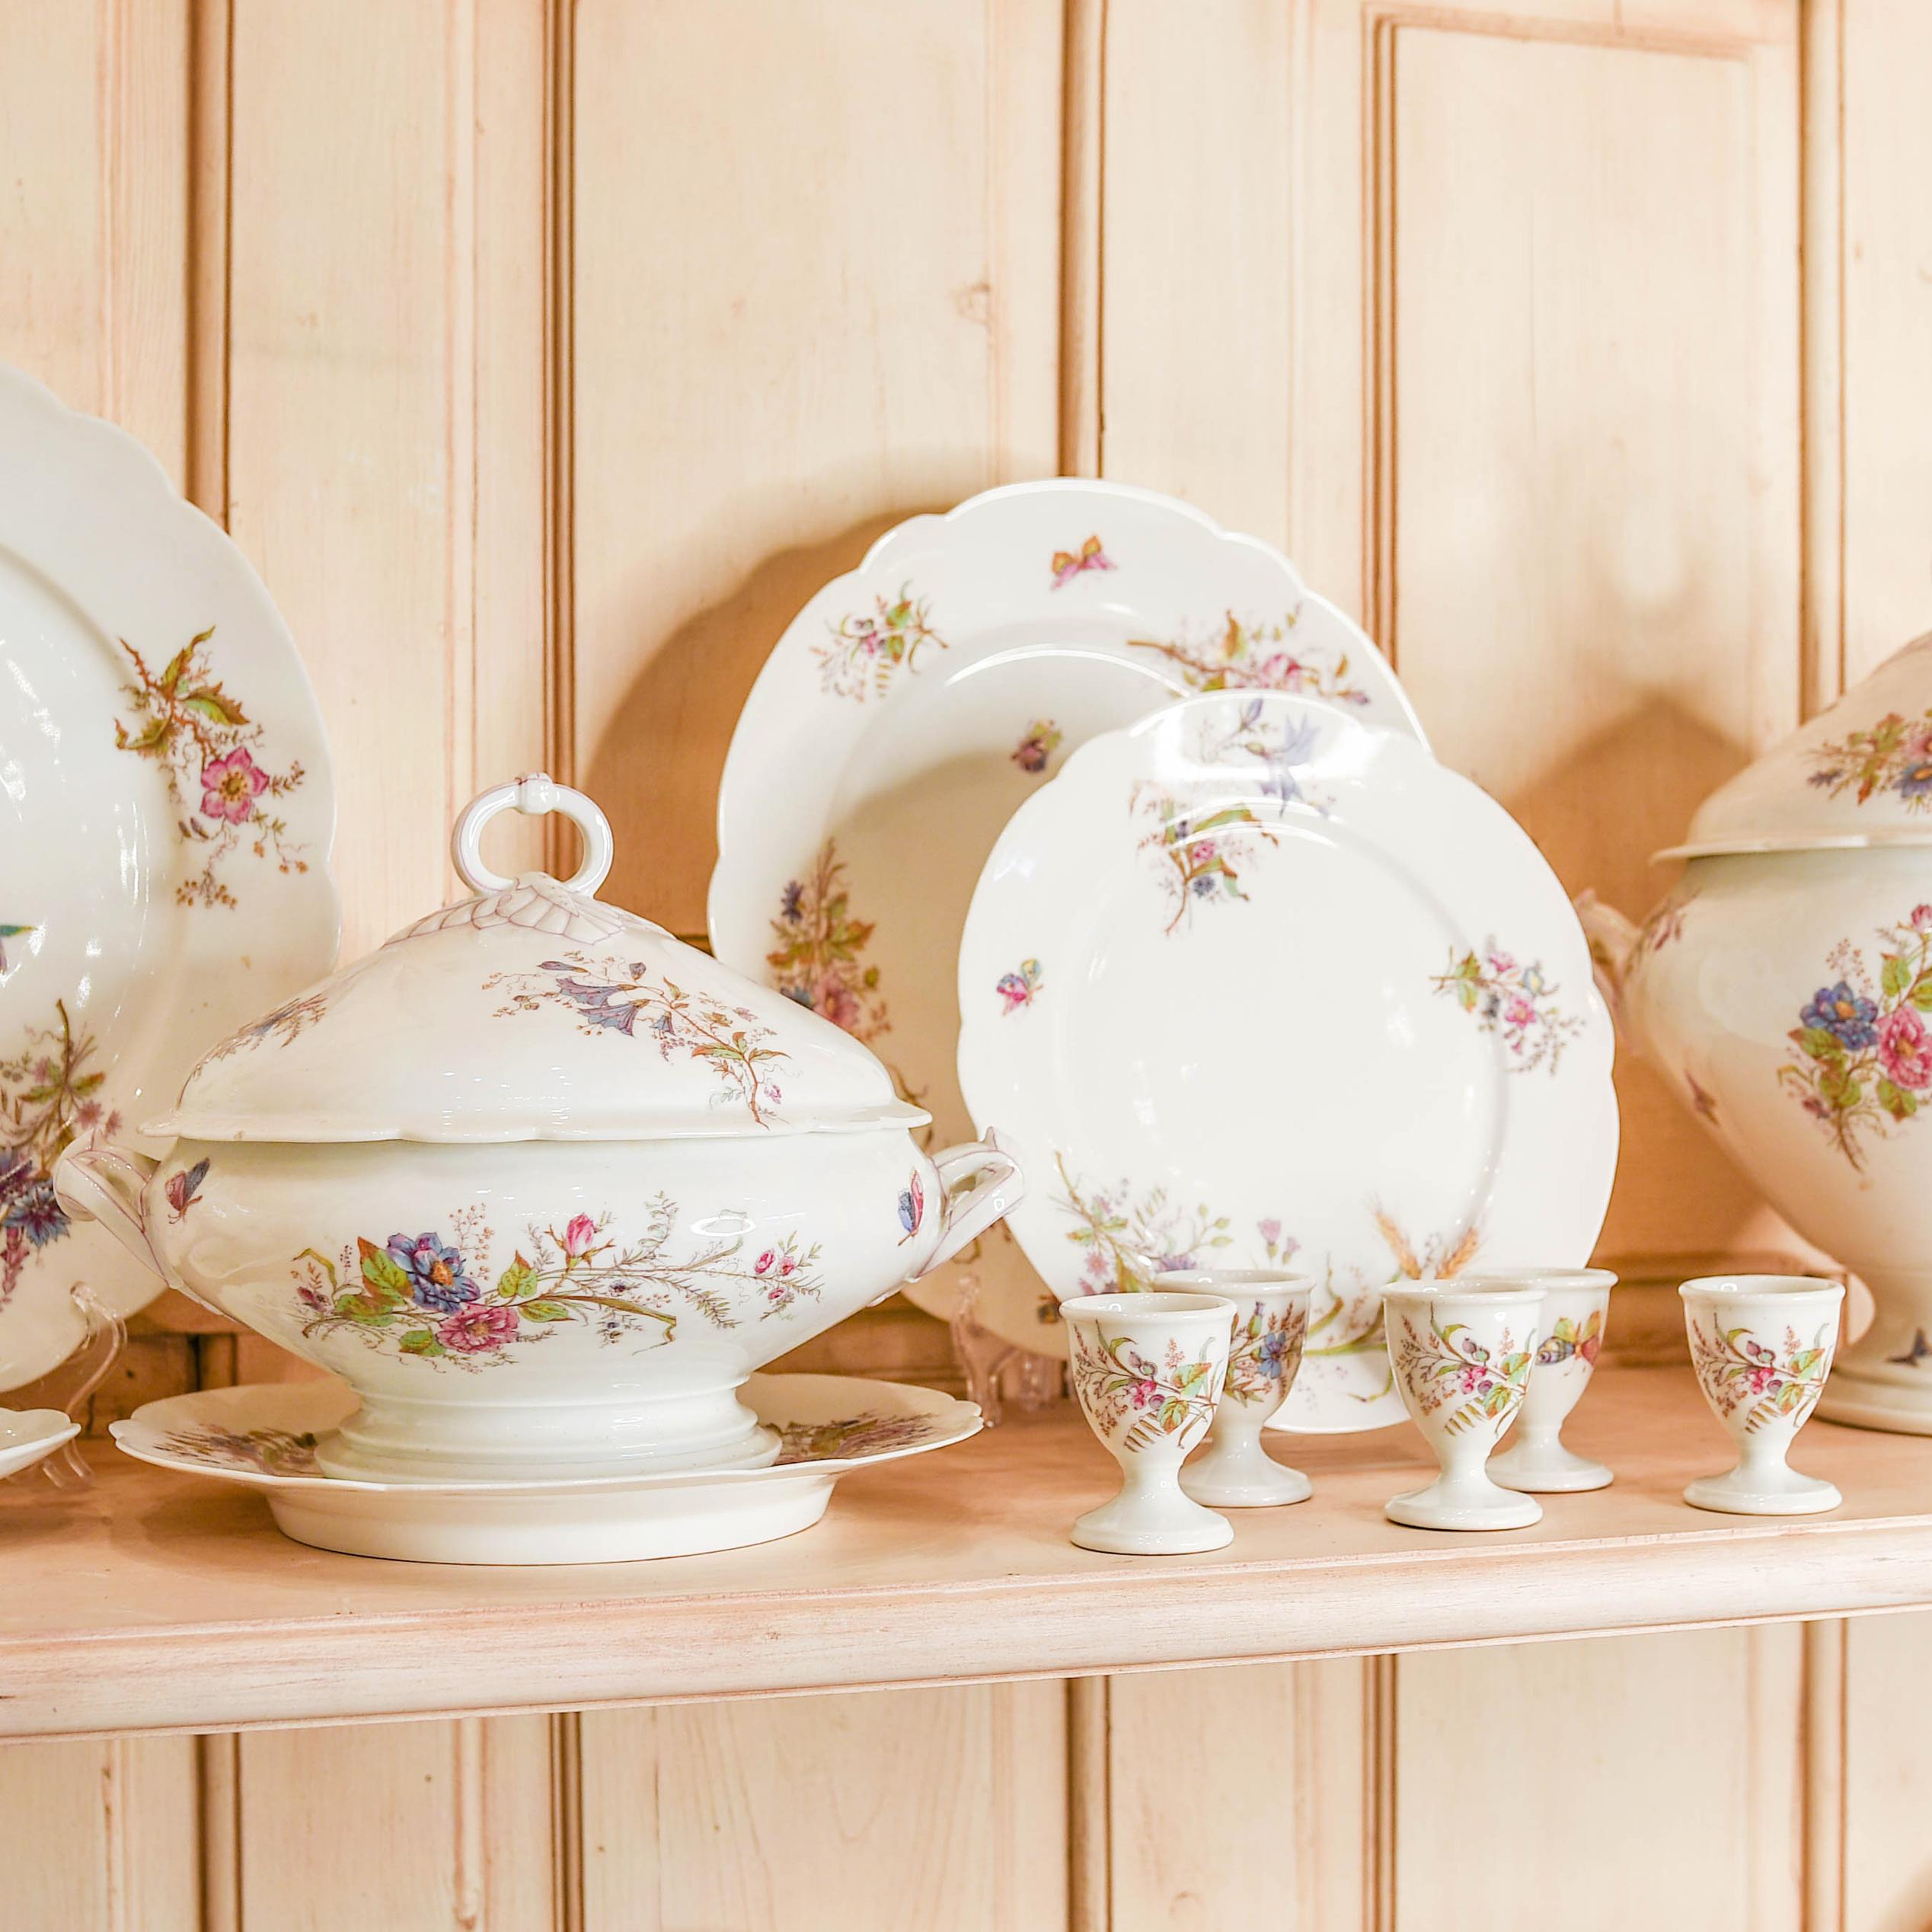 French Set of Pilivuyt Porcelain Tableware For Sale